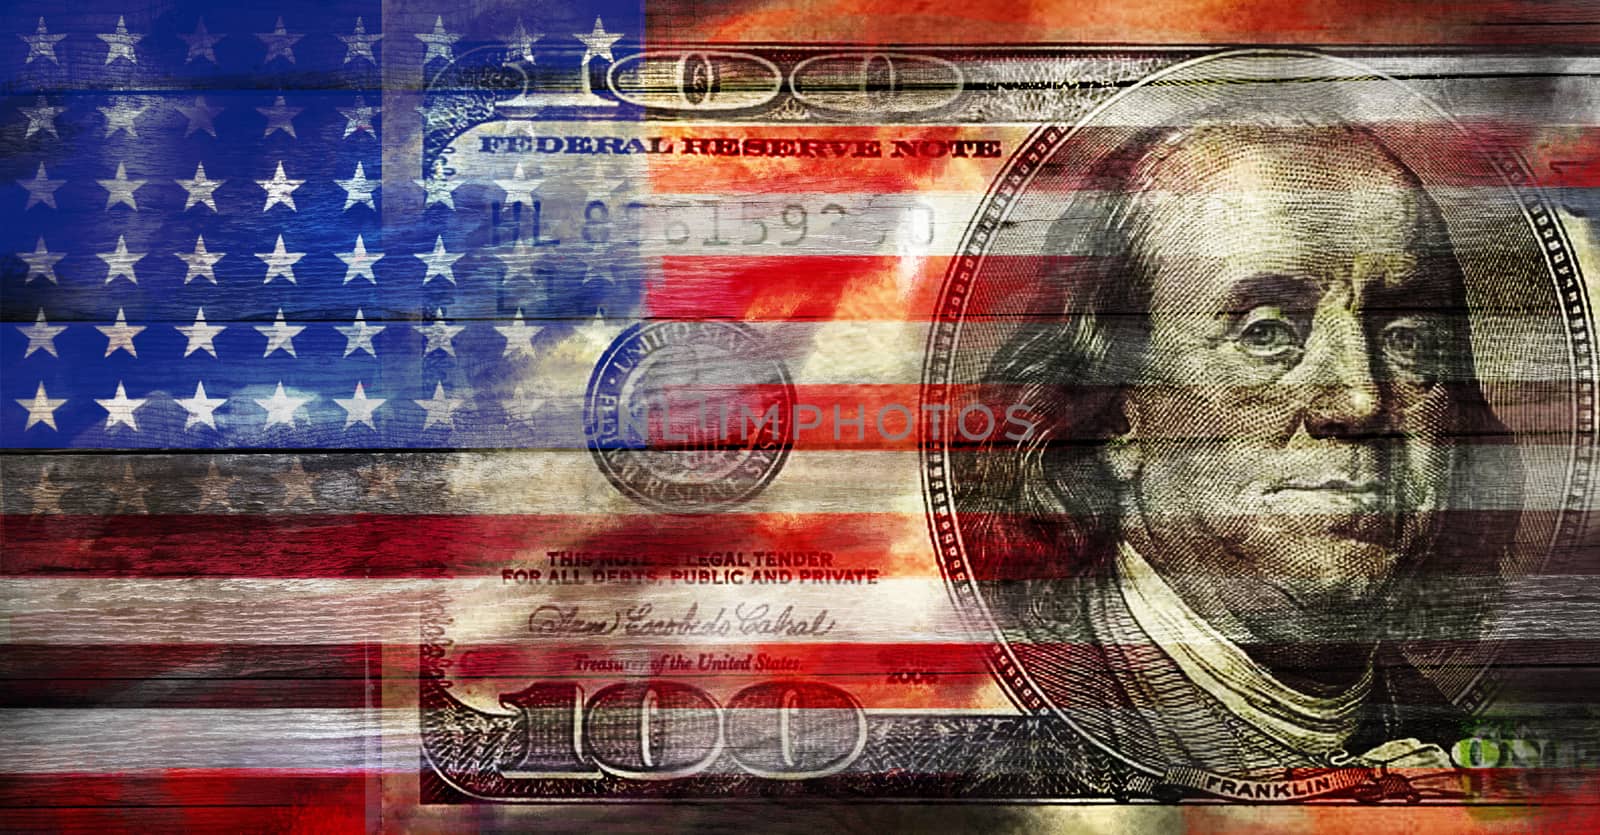 USA flag with US dollar on a wood surface by SlayCer